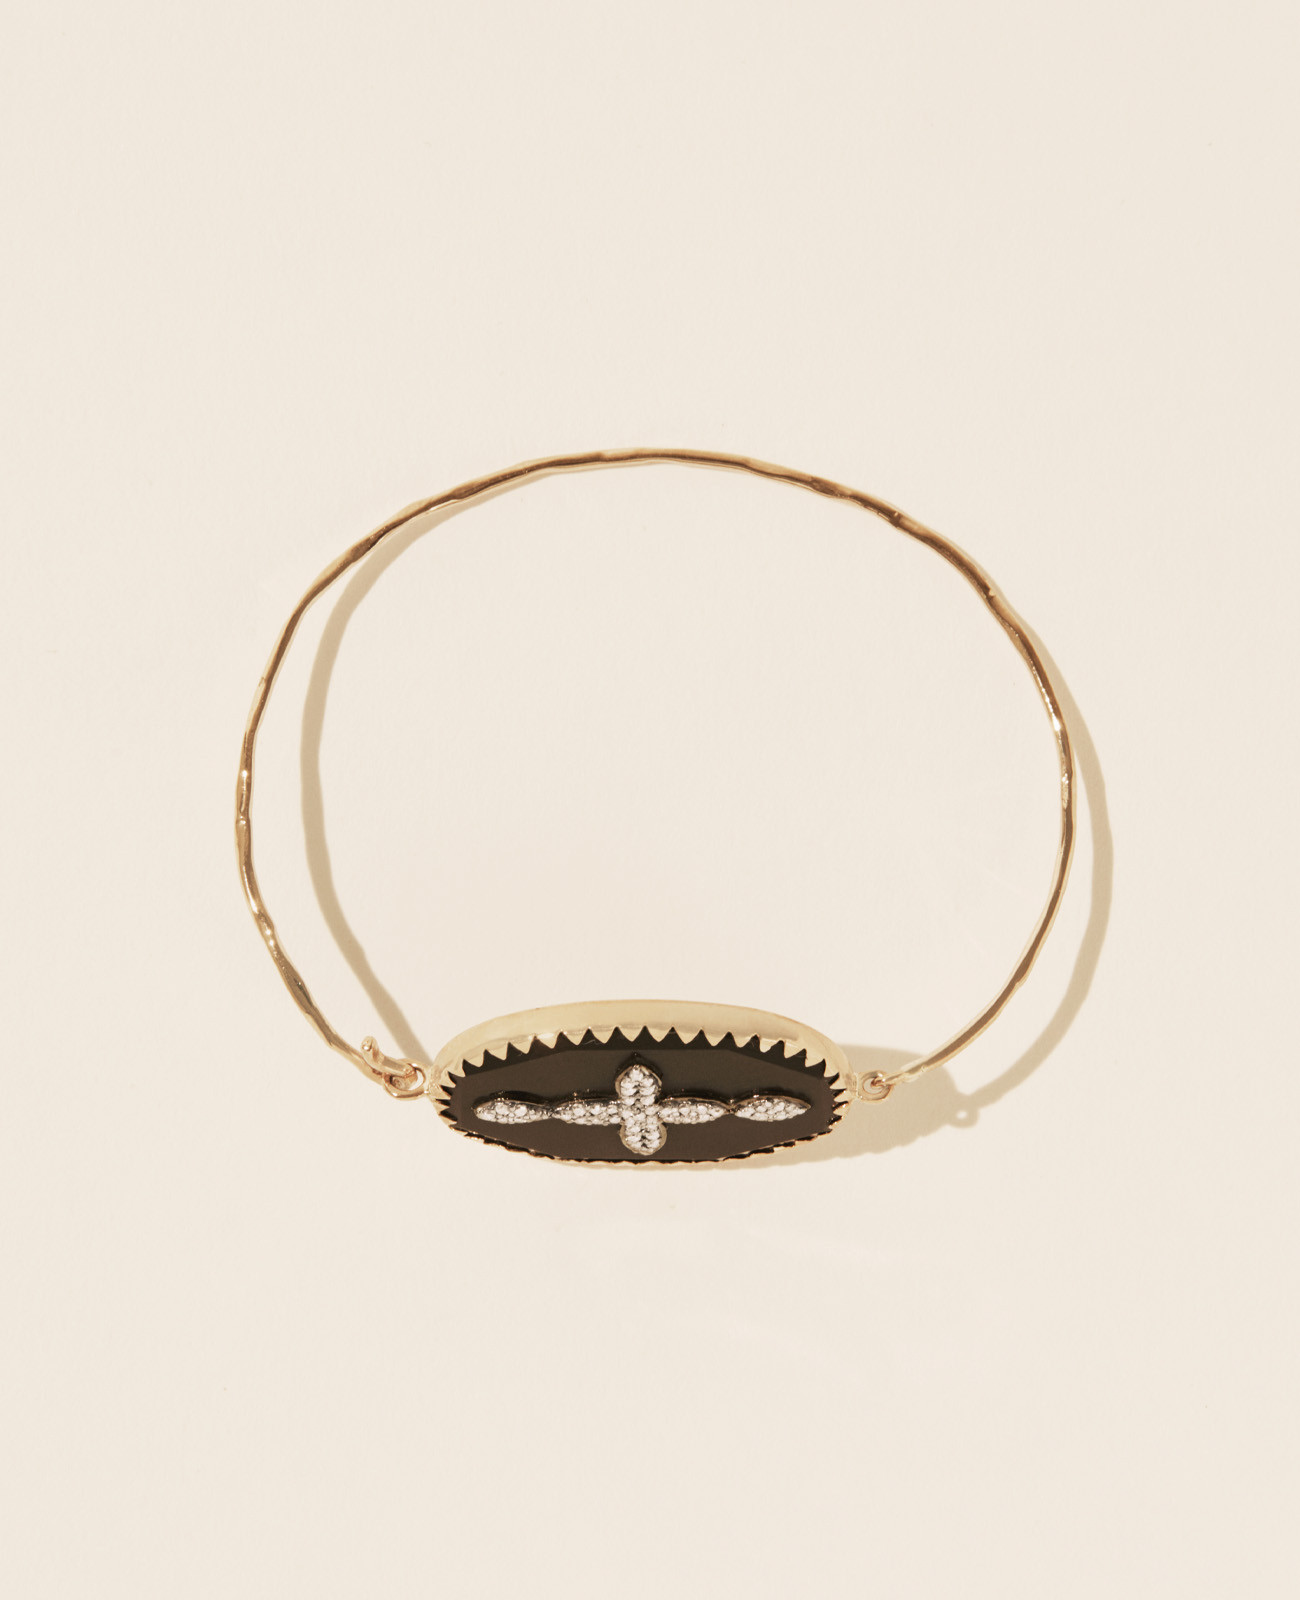 GARANCE N°2 BLACK DIAMOND bracelet pascale monvoisin jewelry paris